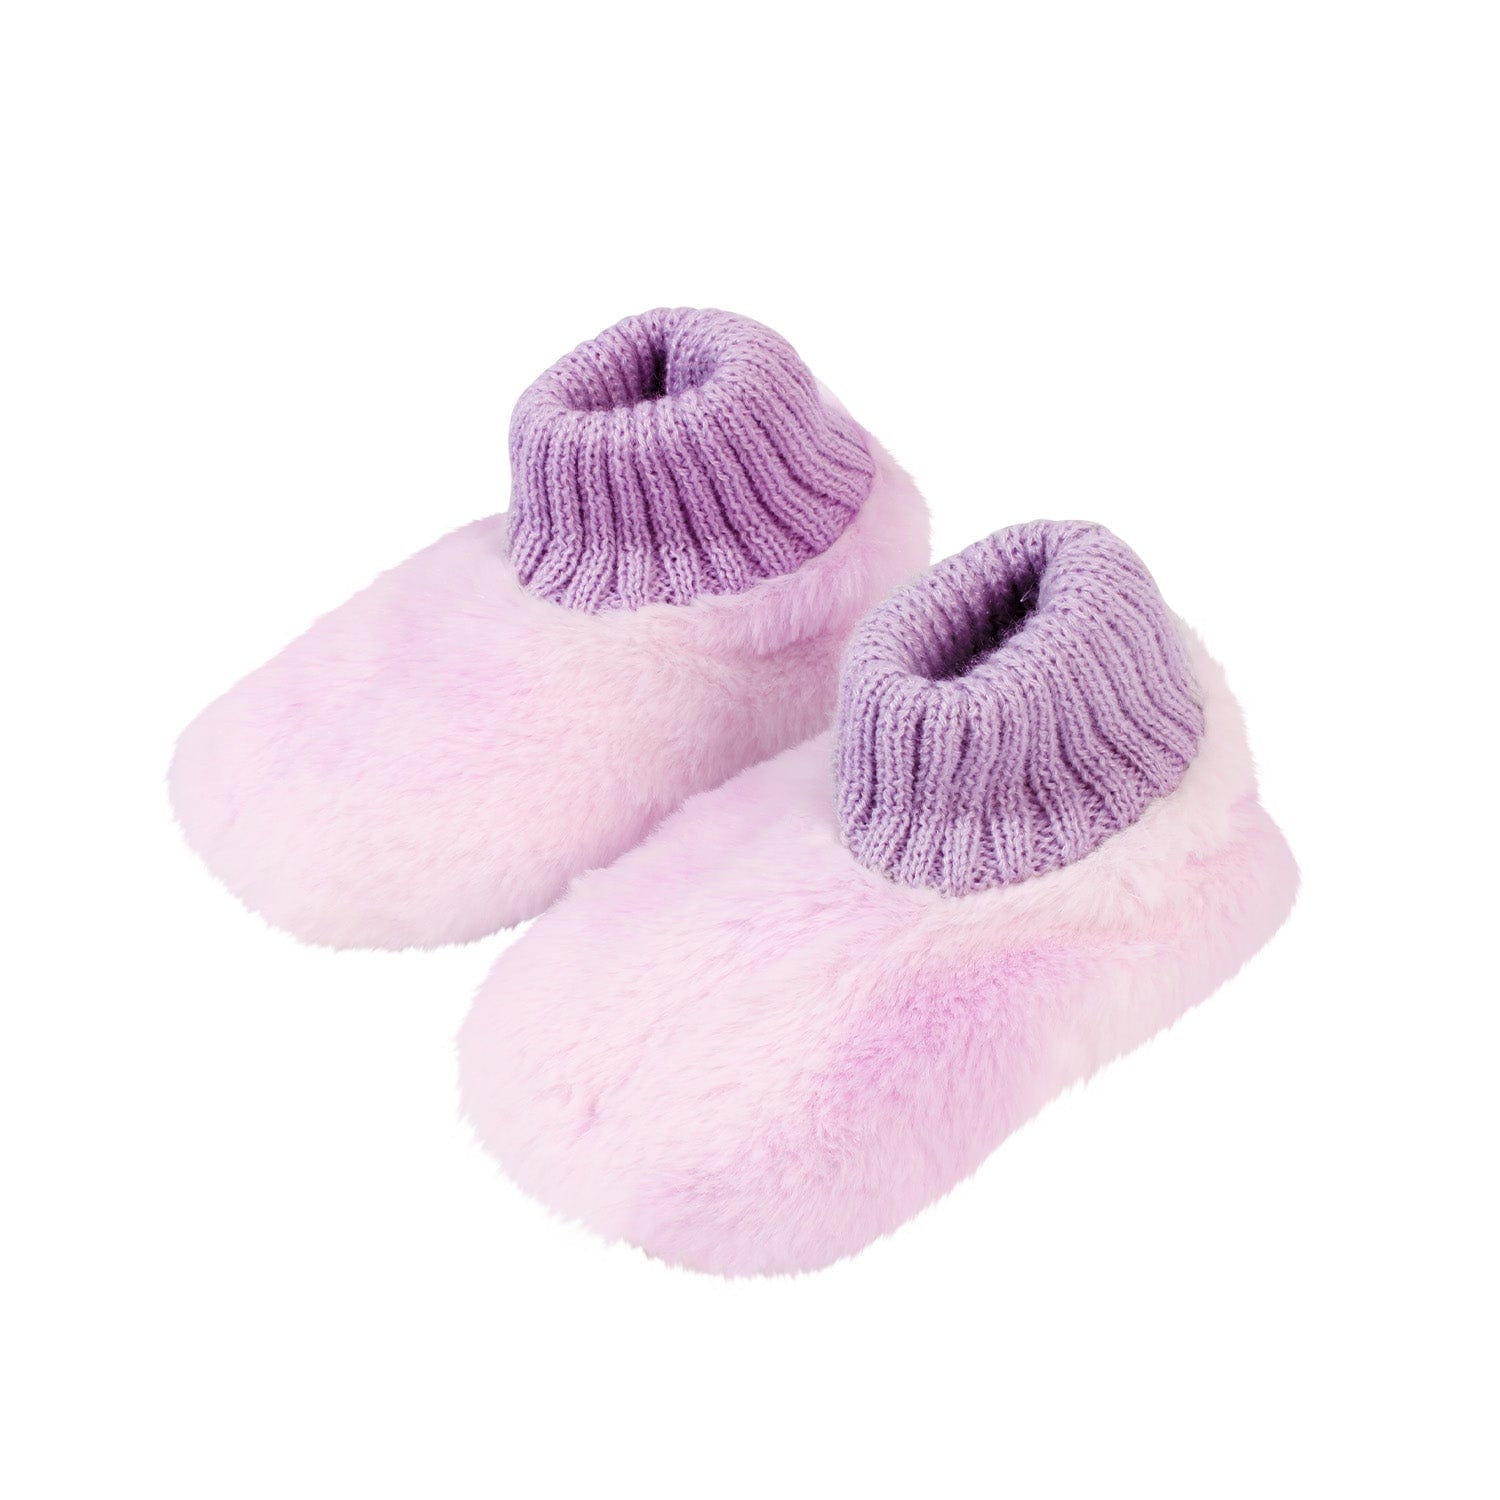 SnuggUps Unisex Shoes SnuggUps Toddler - Tie Dye Purple